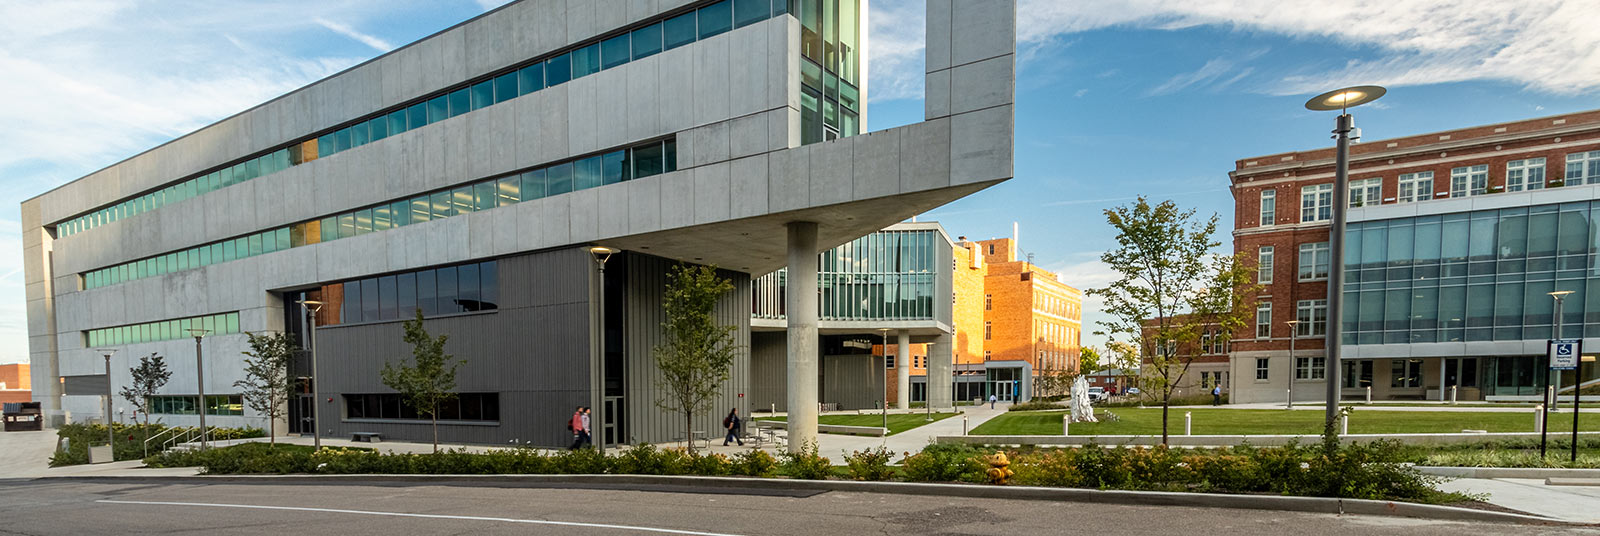 Exterior view of the University of Cincinnati Health Sciences Building.